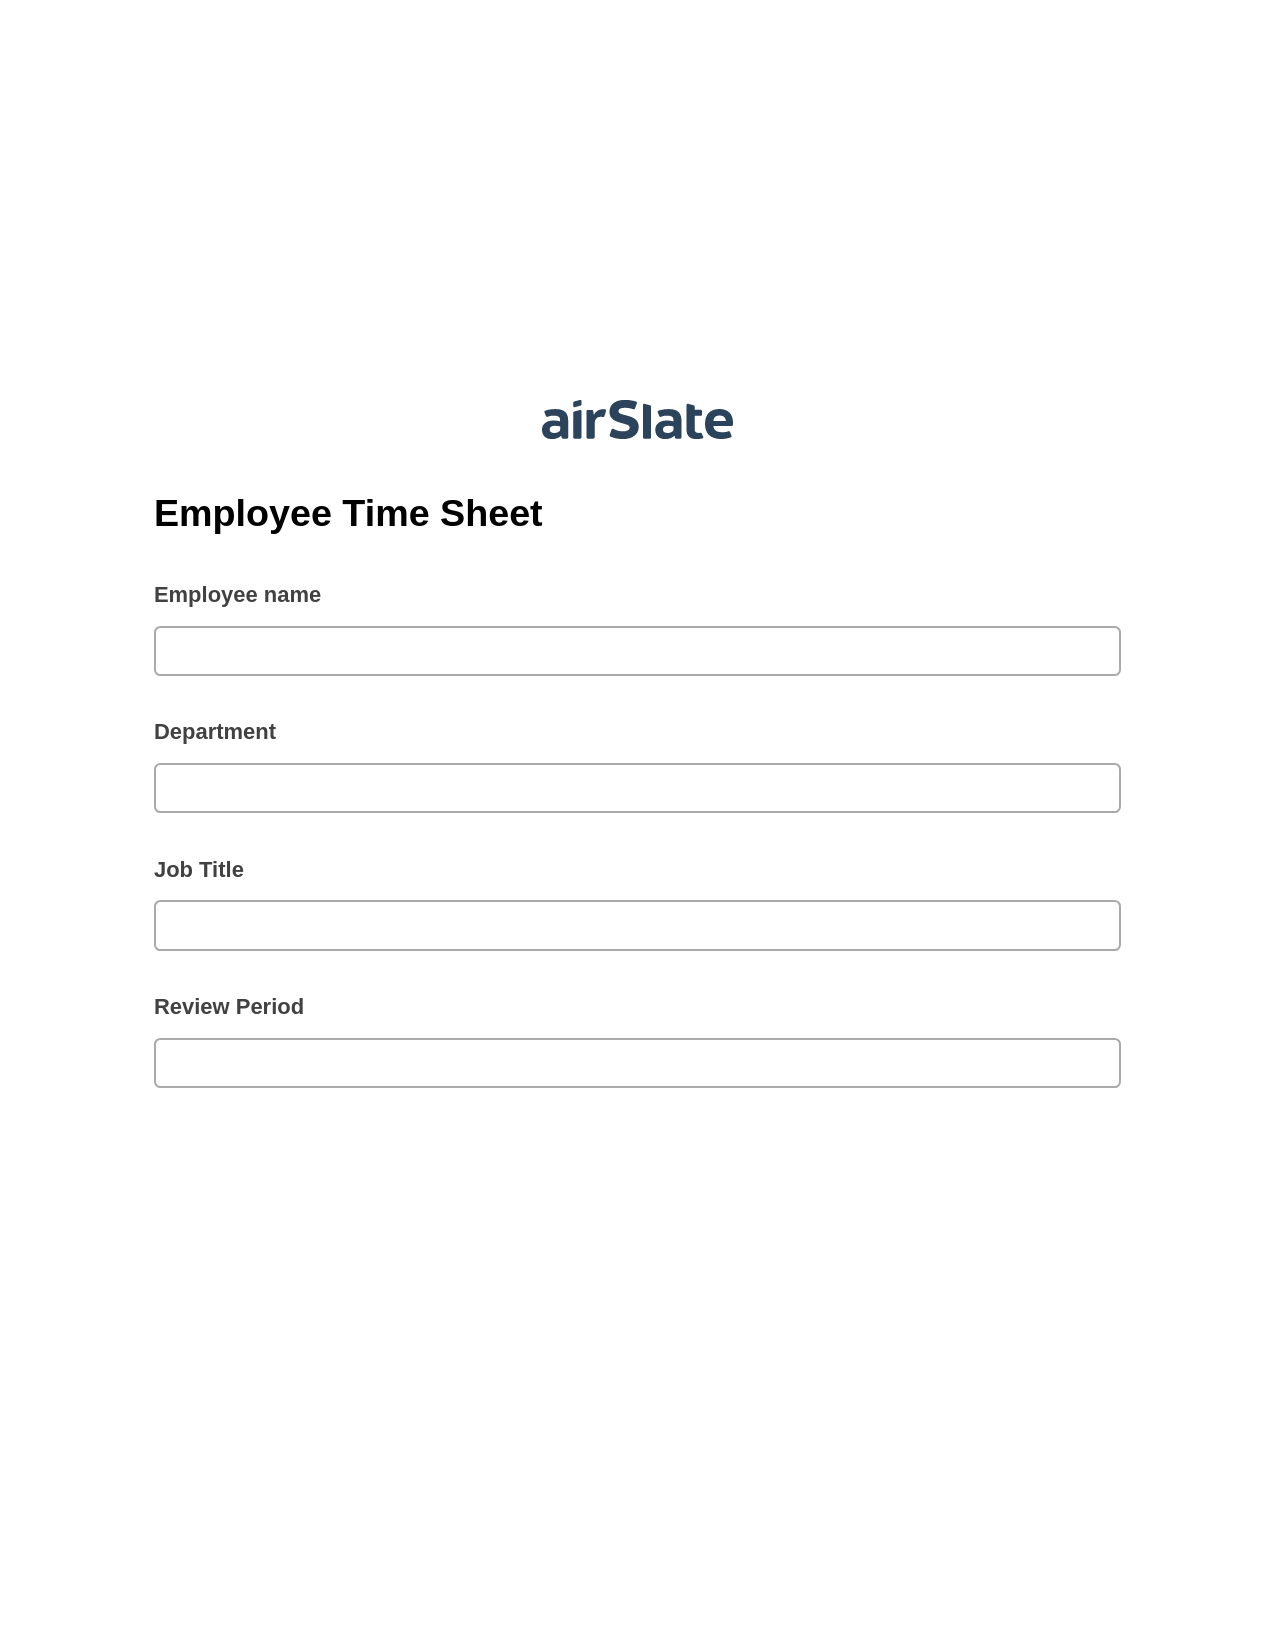 Multirole Employee Time Sheet Pre-fill from another Slate Bot, Update Audit Trail Bot, Webhook Postfinish Bot